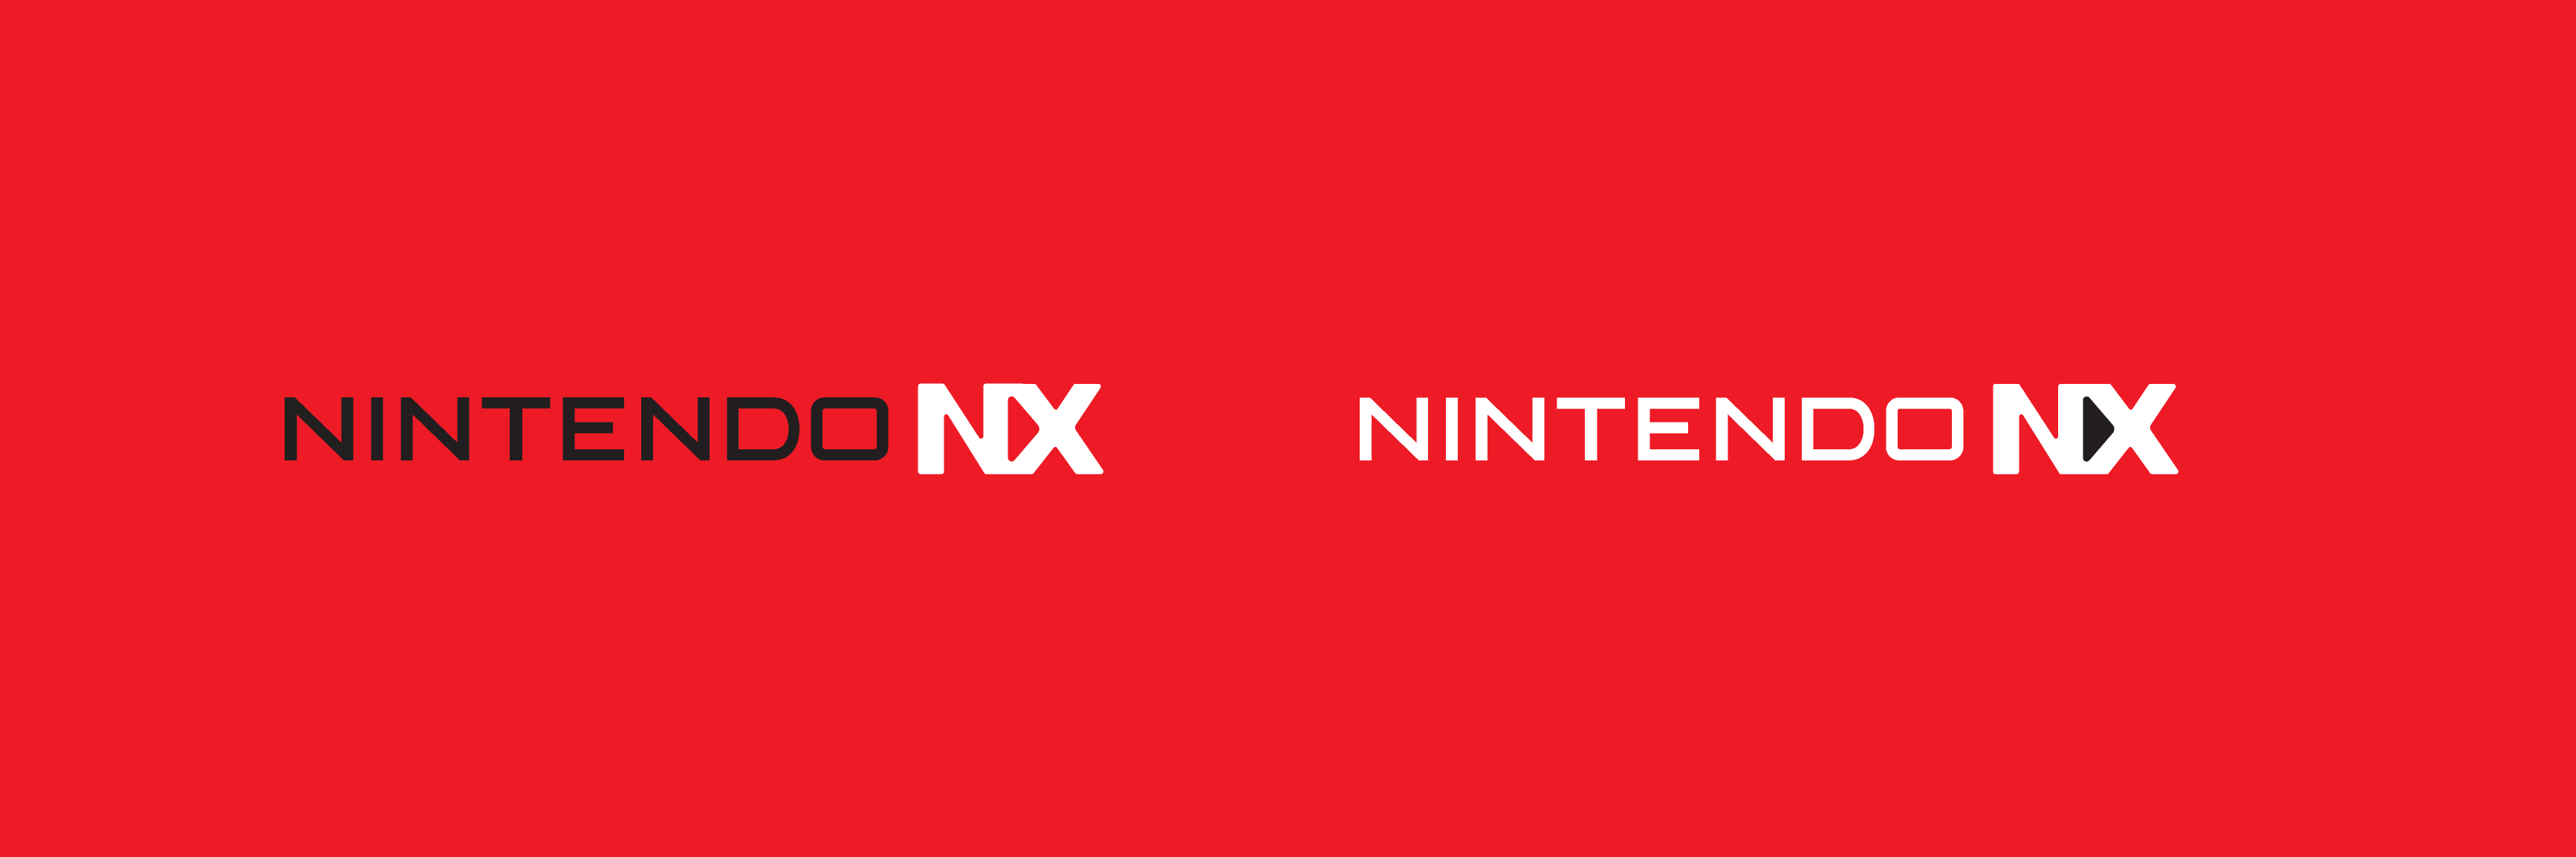 NX Logo - NX Logo Idea (Yes I know NX is not the final name) : NintendoNX